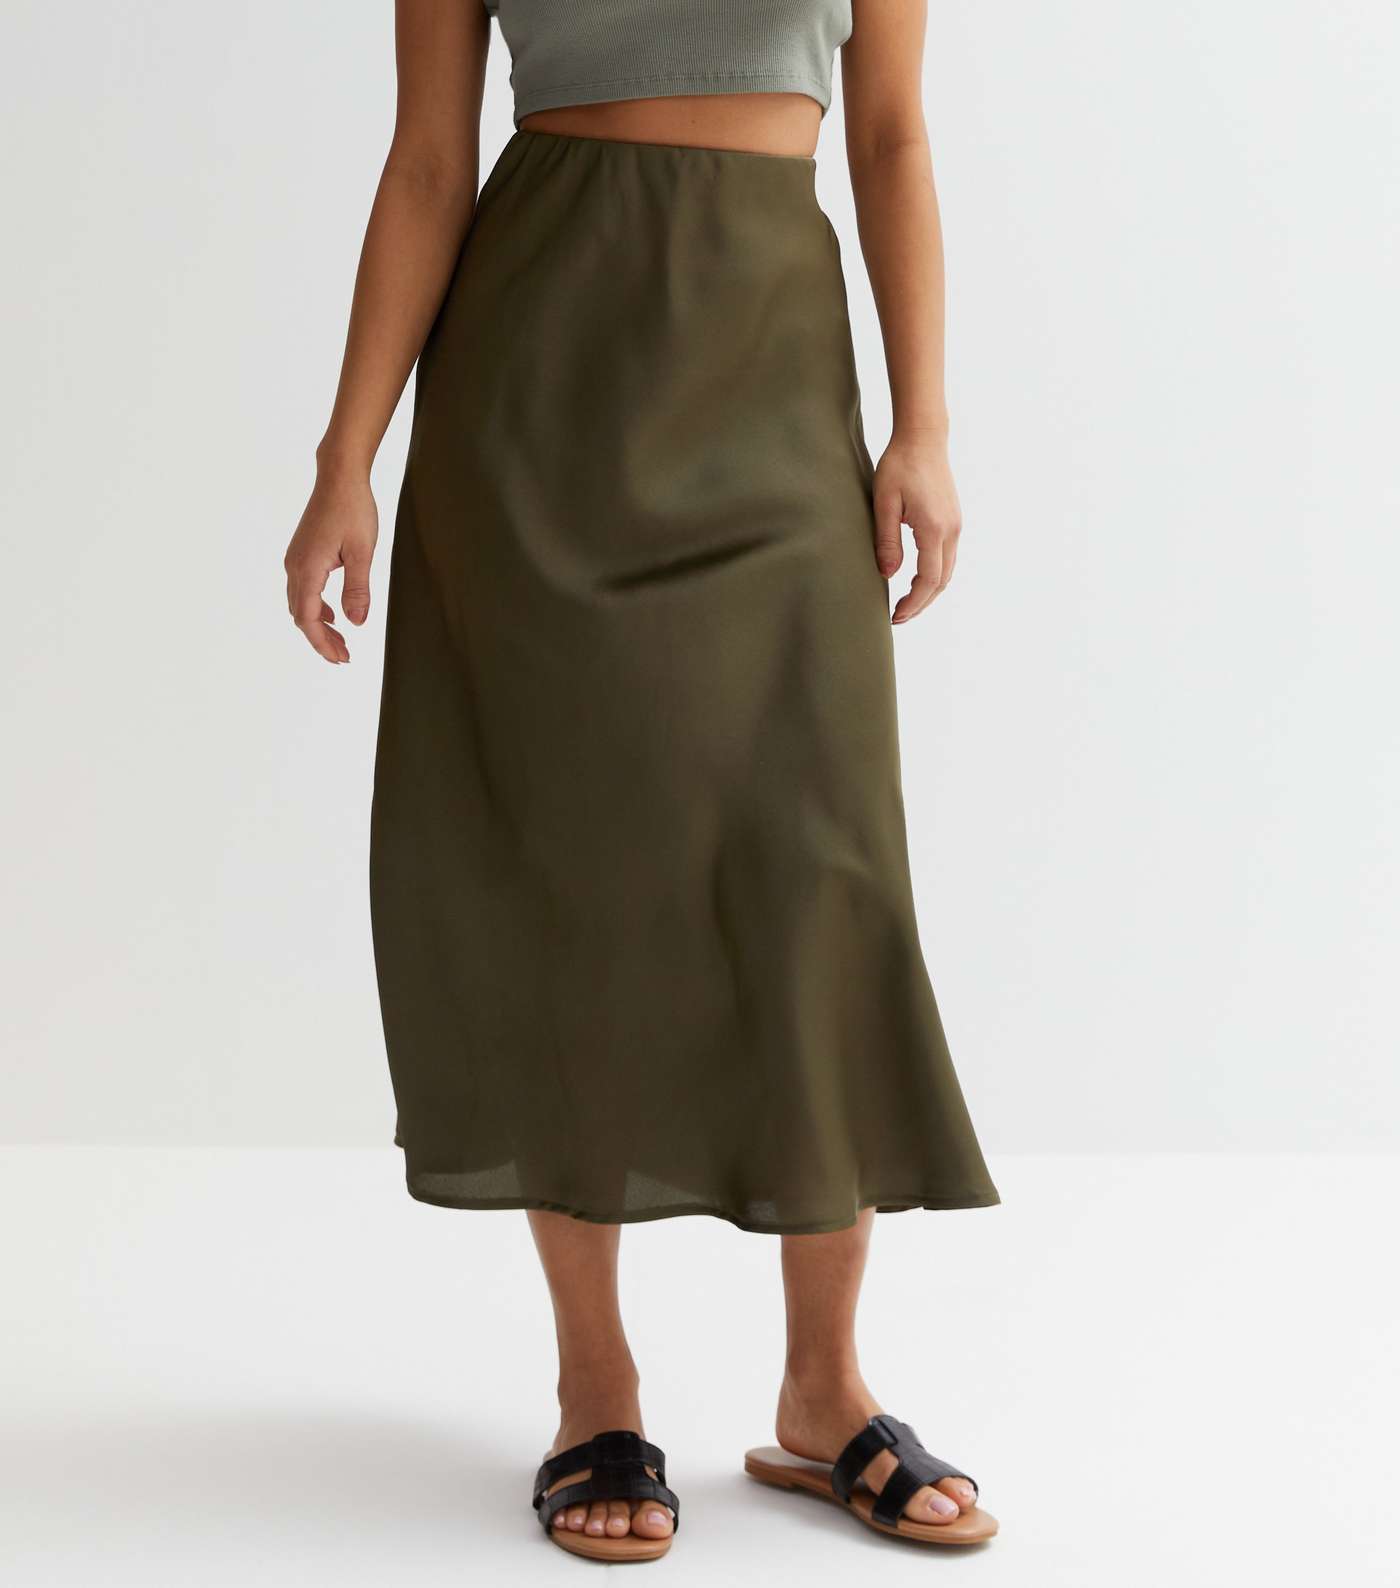 Petite Khaki Satin Bias Cut Midaxi Skirt Image 2